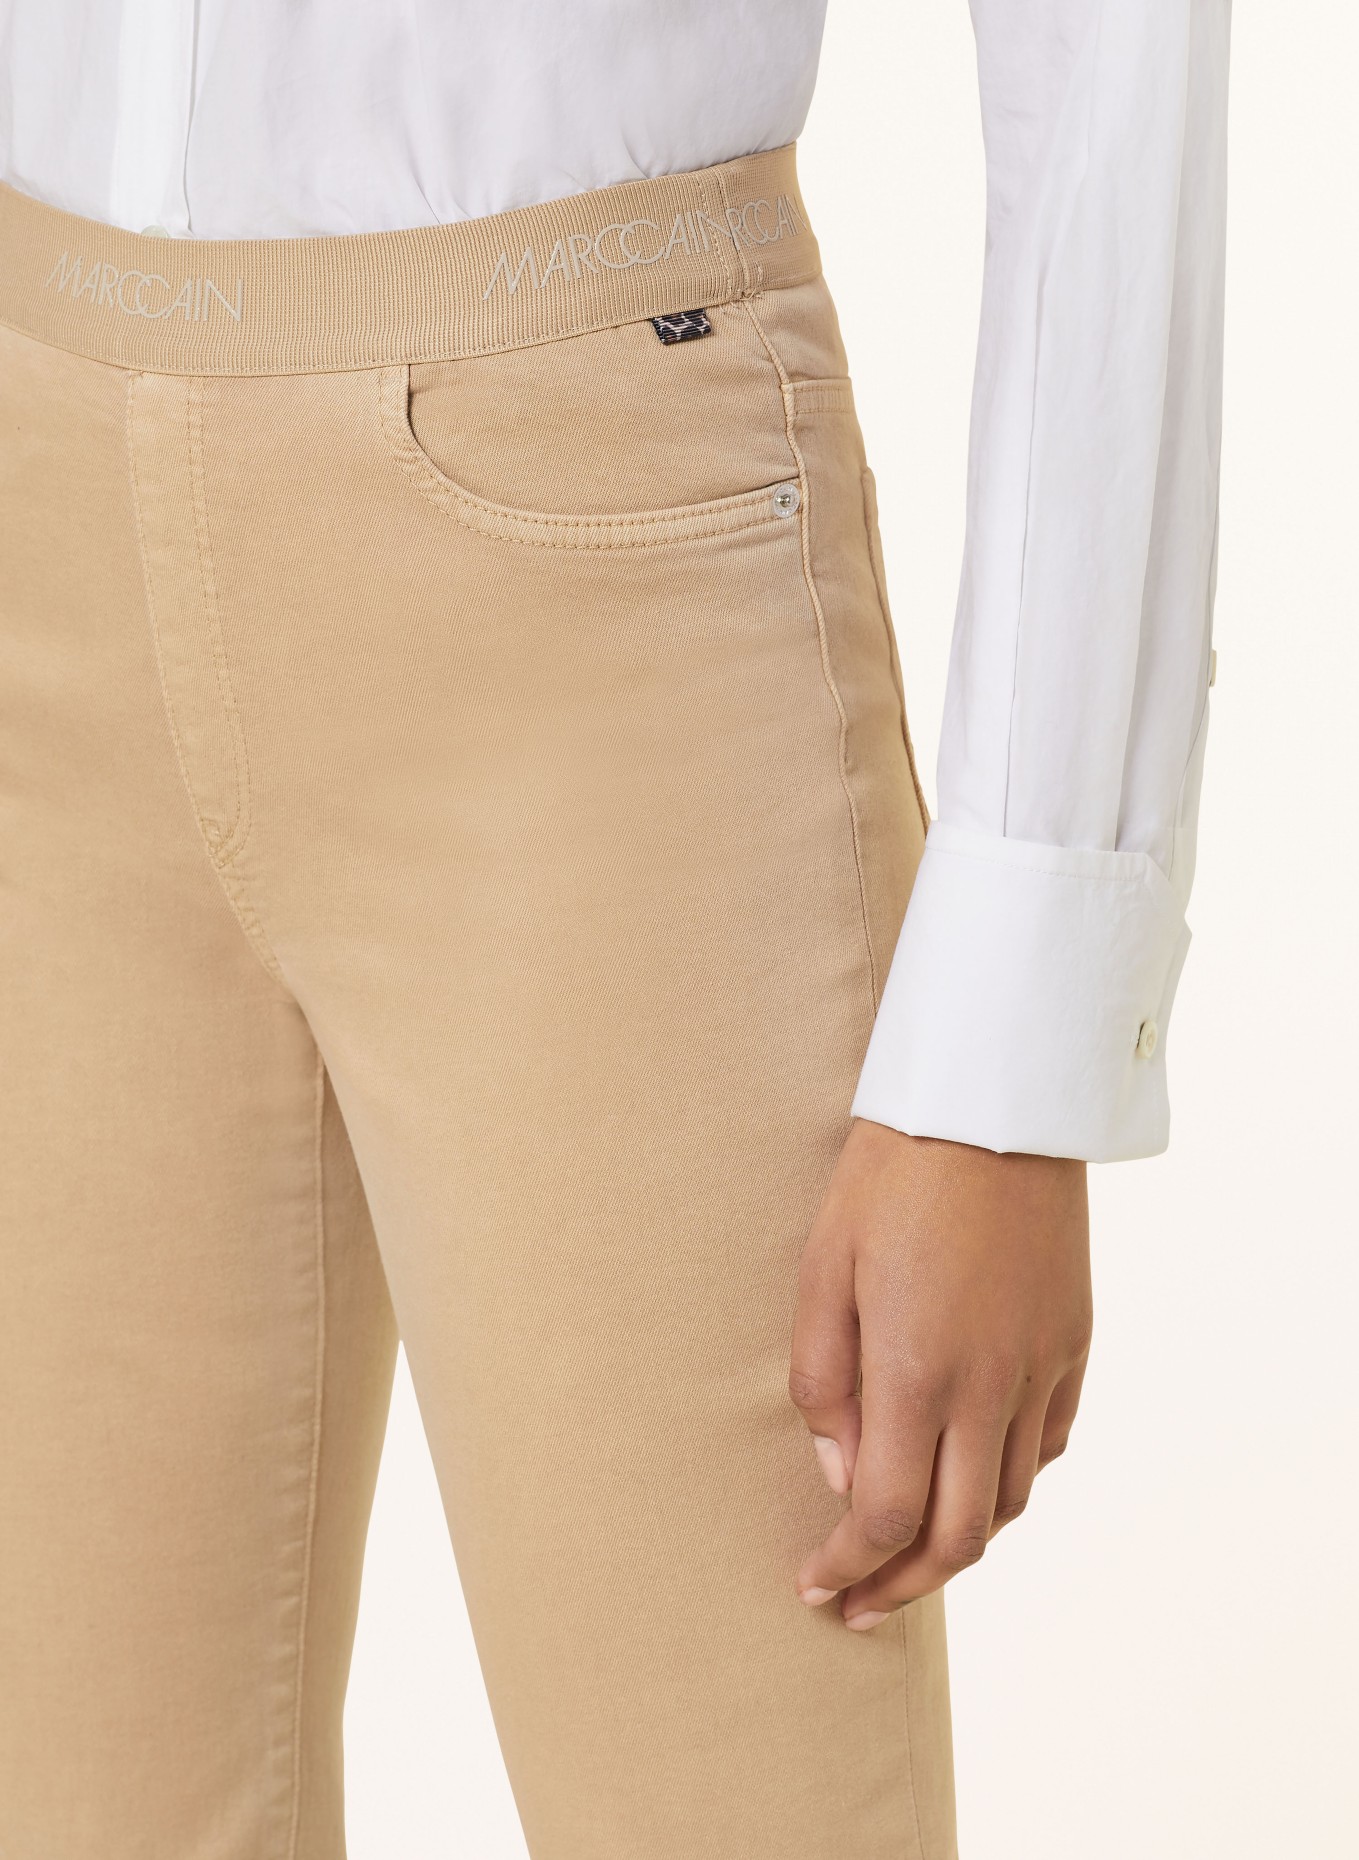 MARC CAIN Jeans, Farbe: 610 light stone (Bild 5)